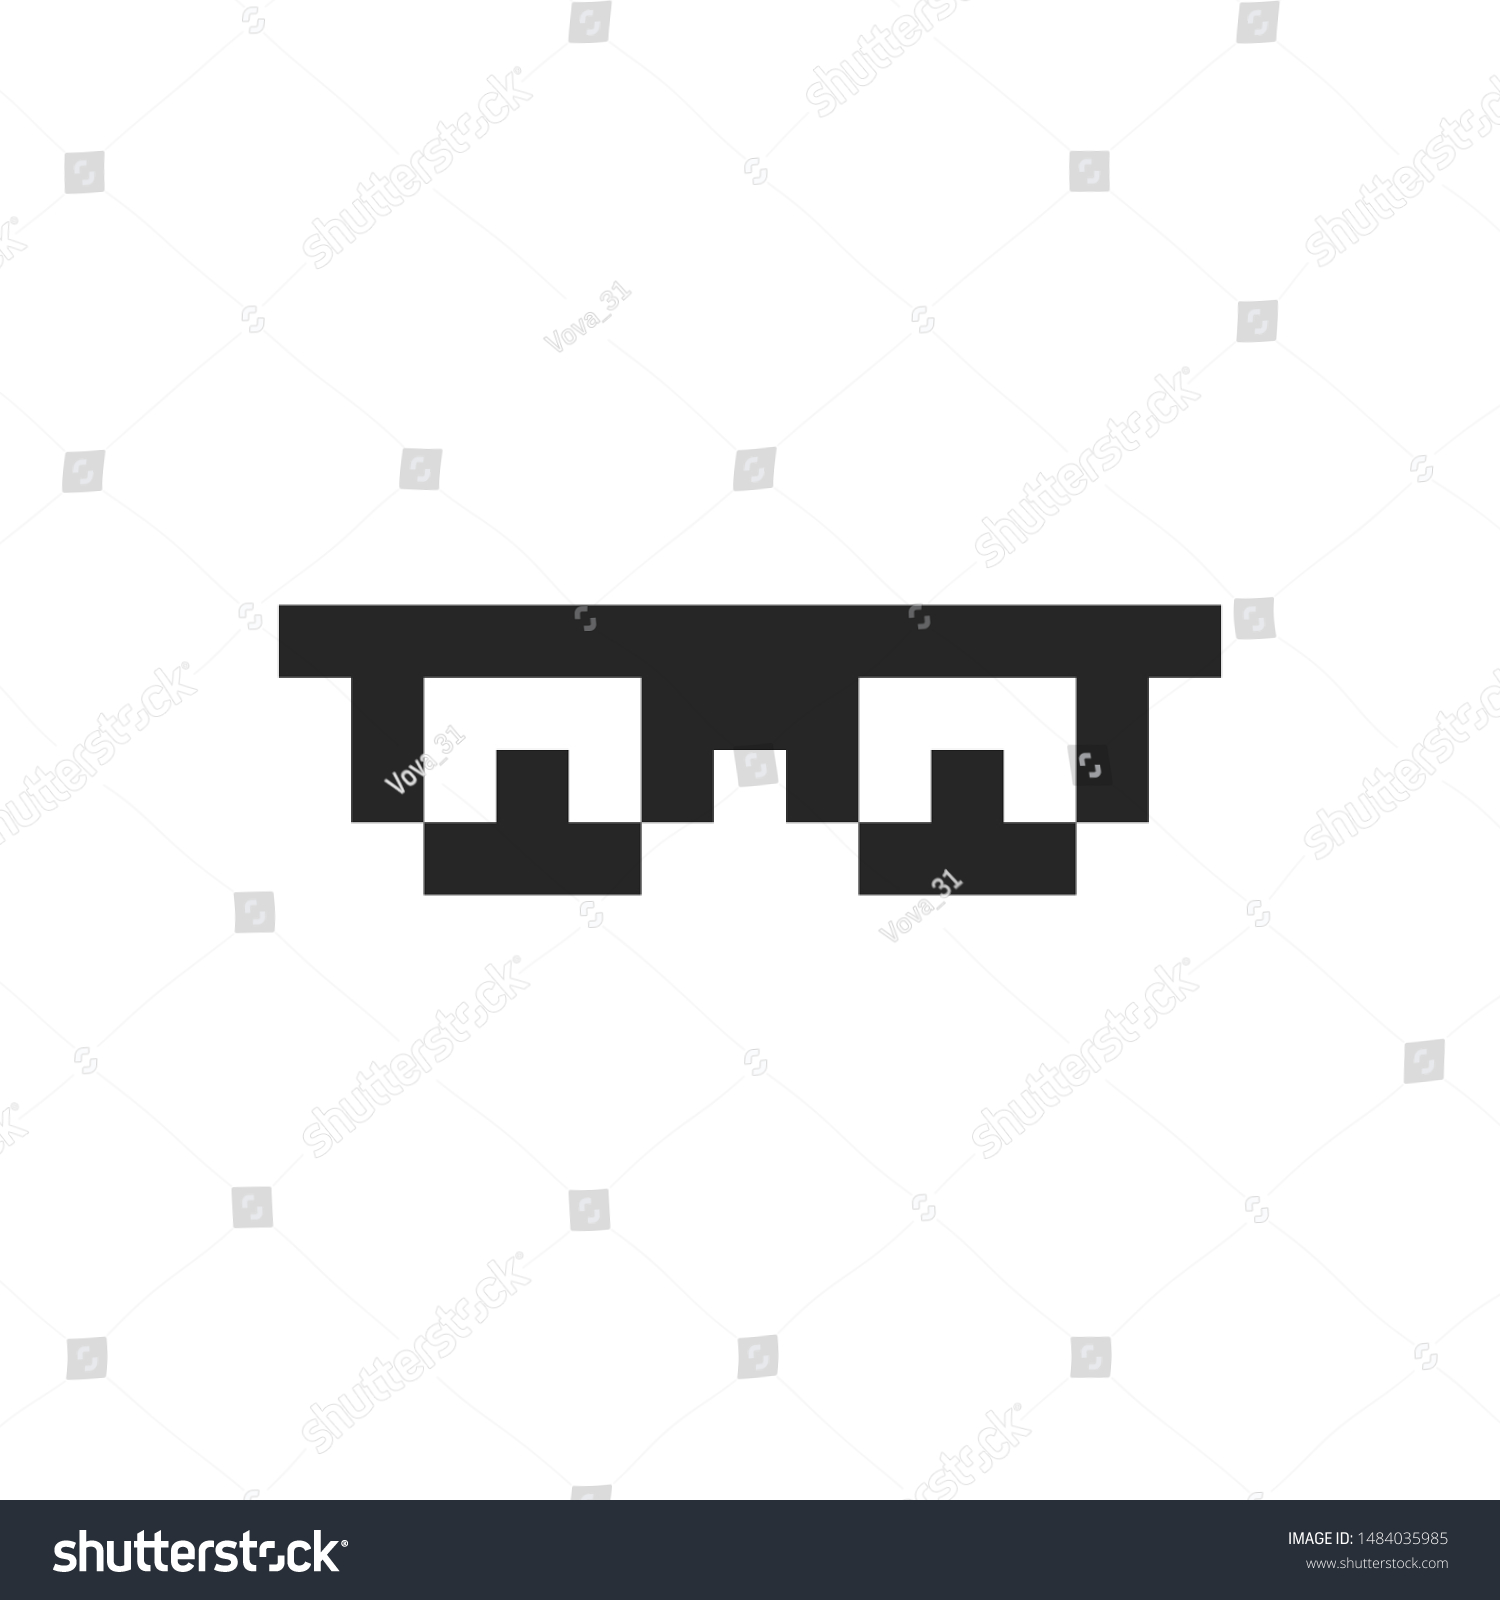 Pixel Art Glasses Thug Life Meme Stock Illustration 1484035985